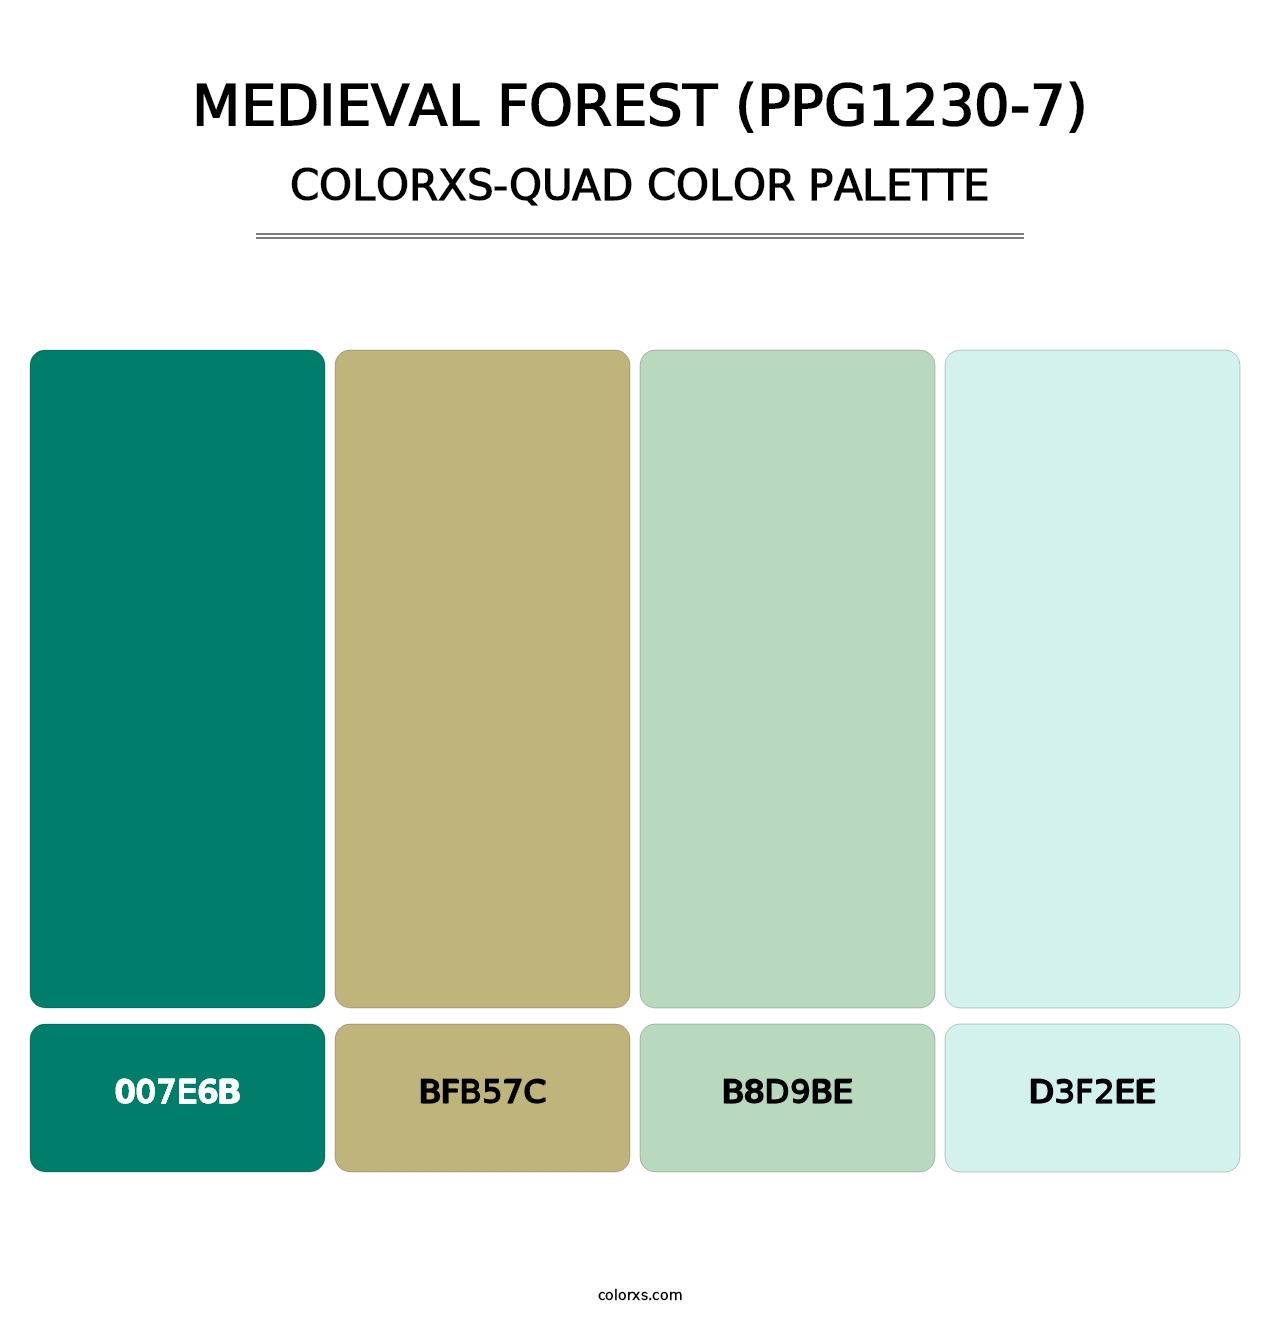 Medieval Forest (PPG1230-7) - Colorxs Quad Palette